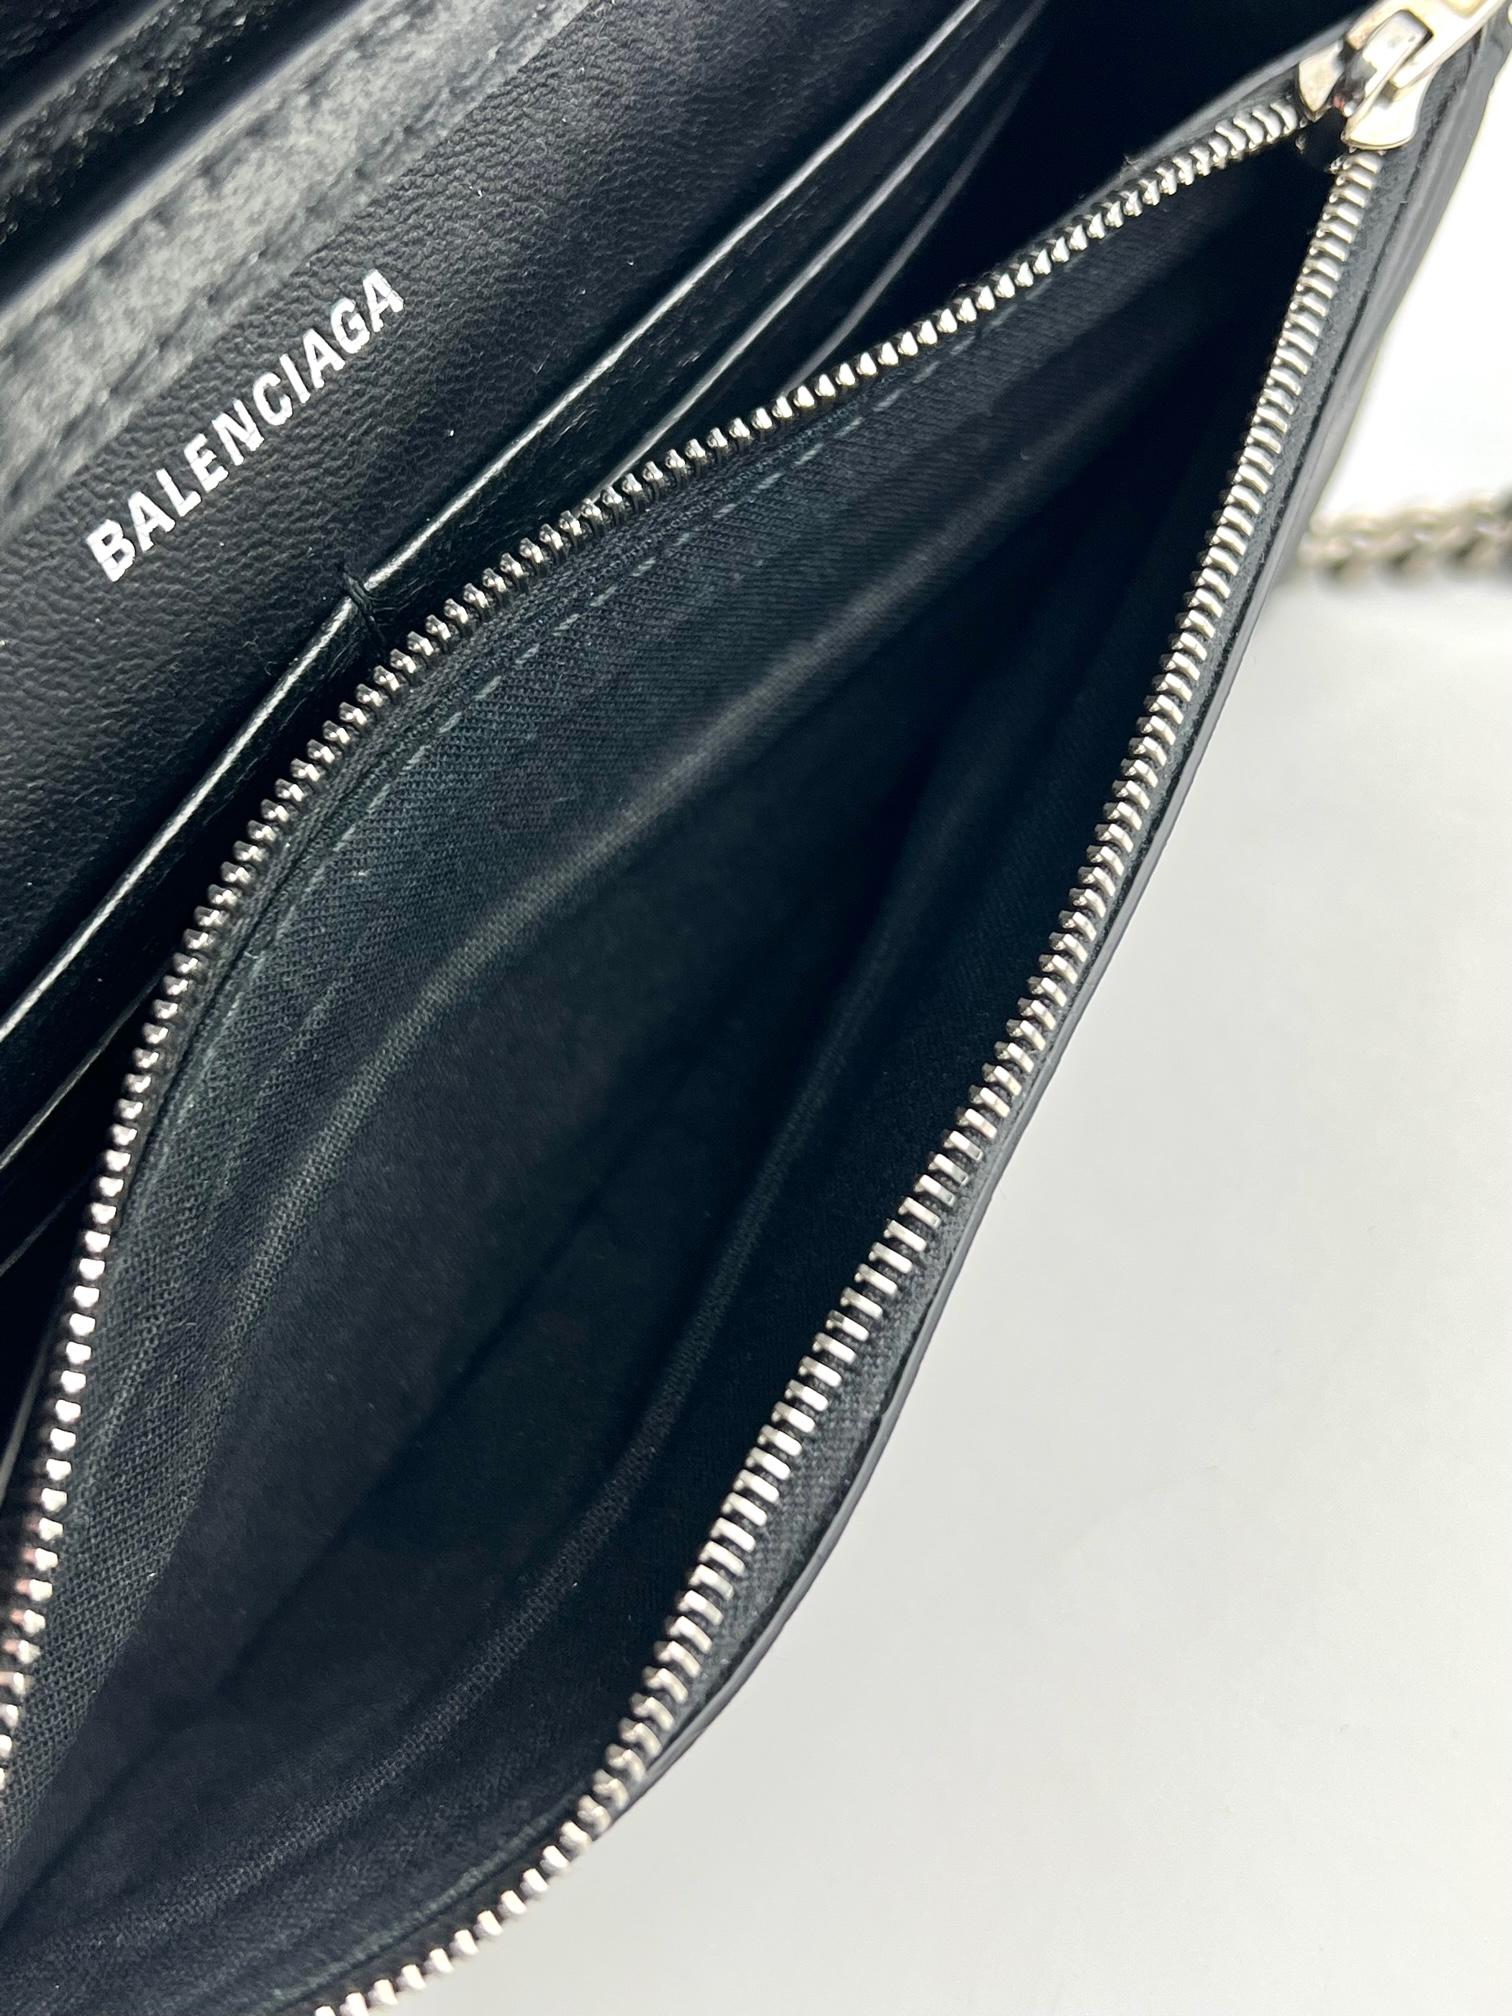 BALENCIAGA Hourglass Wallet On Chain Black Glitter Clutch Shoulder Bag For Sale 2